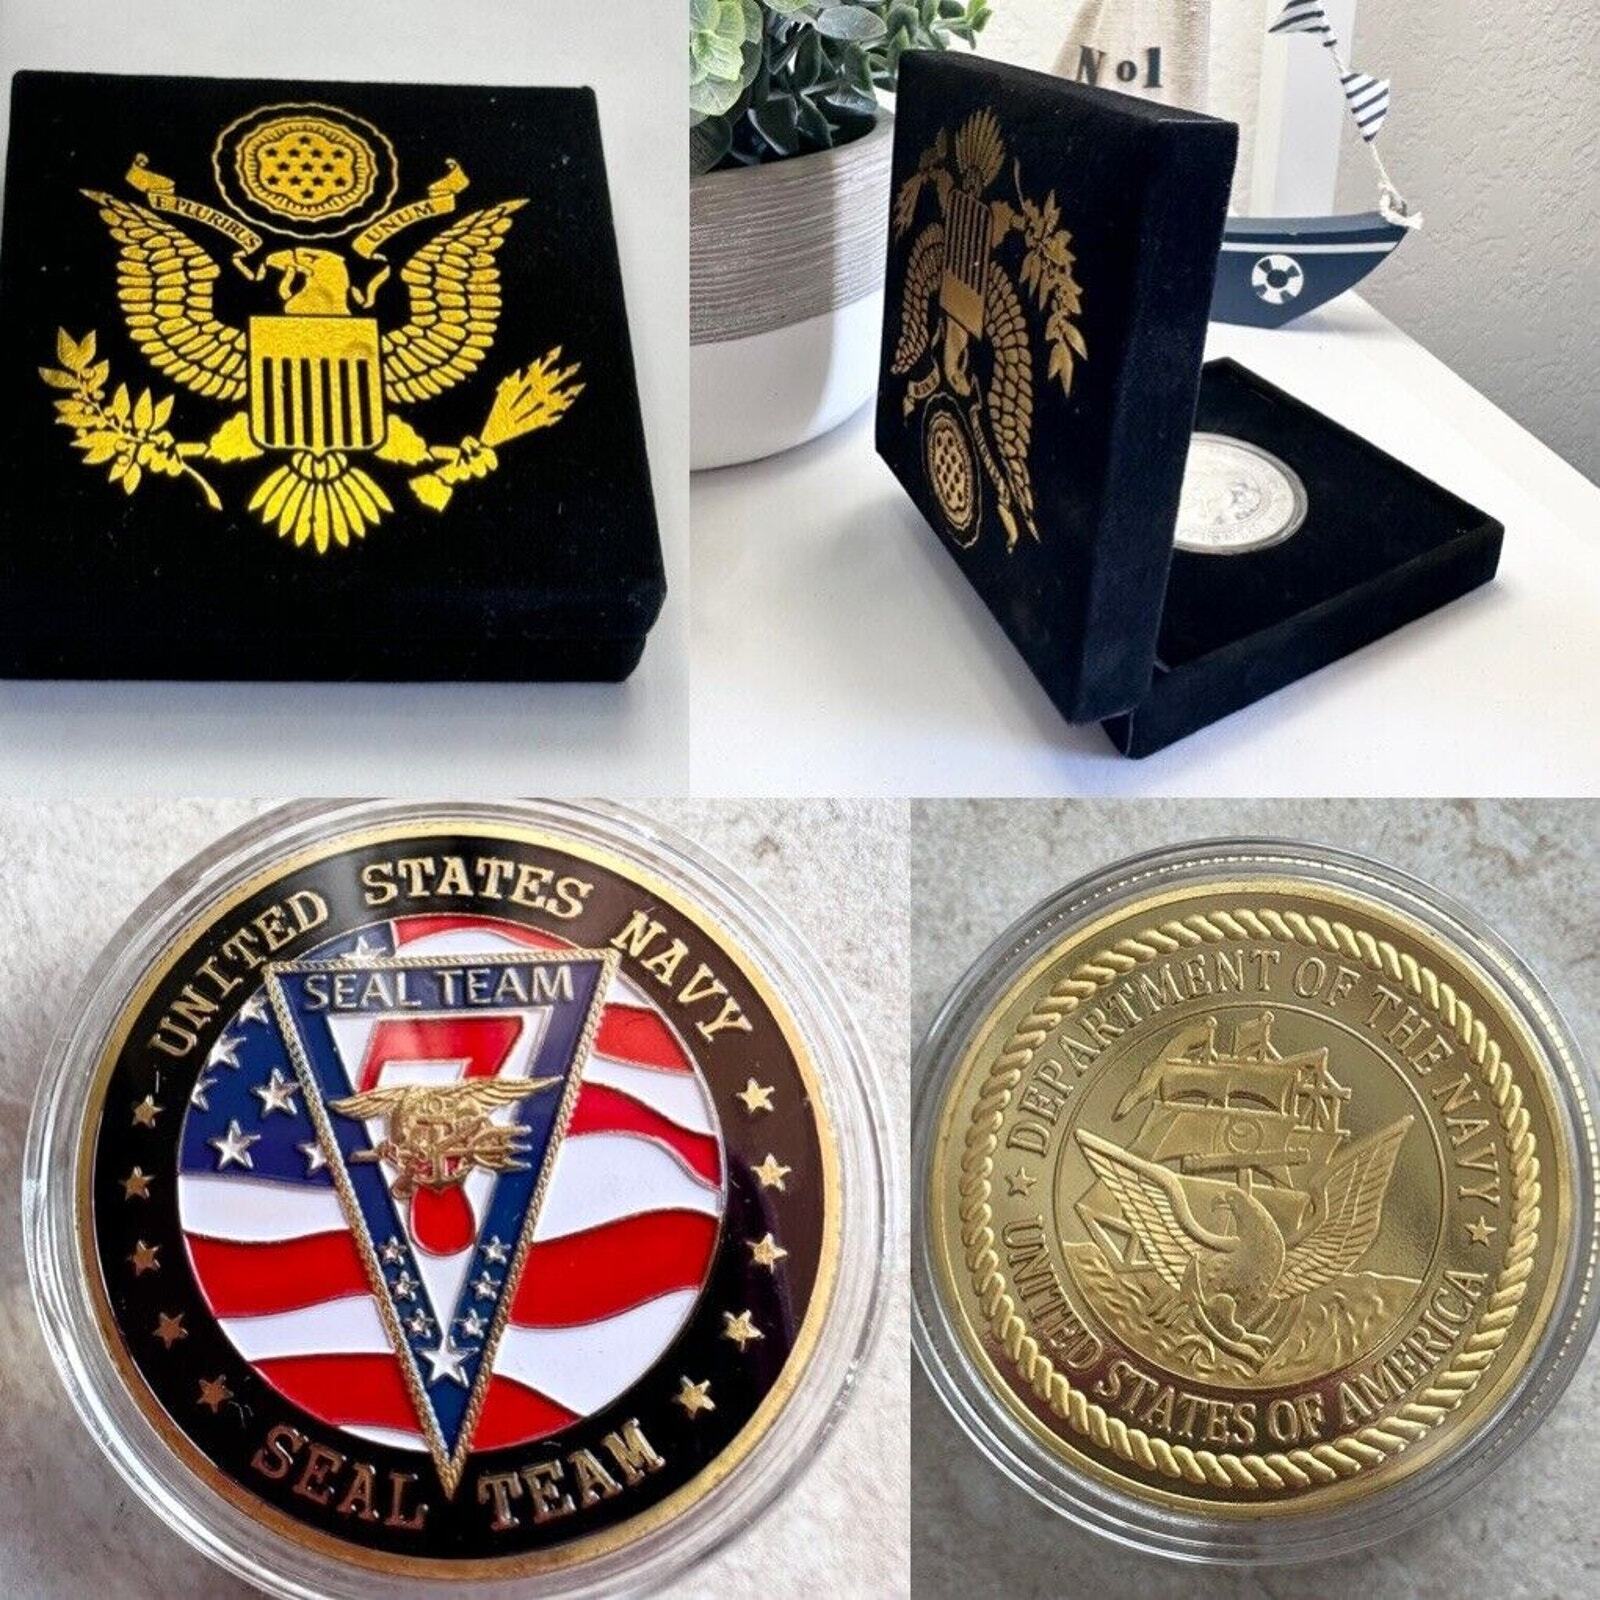 US NAVY USN SEAL TEAM SEVEN Challenge Coin with velvet Presentation case